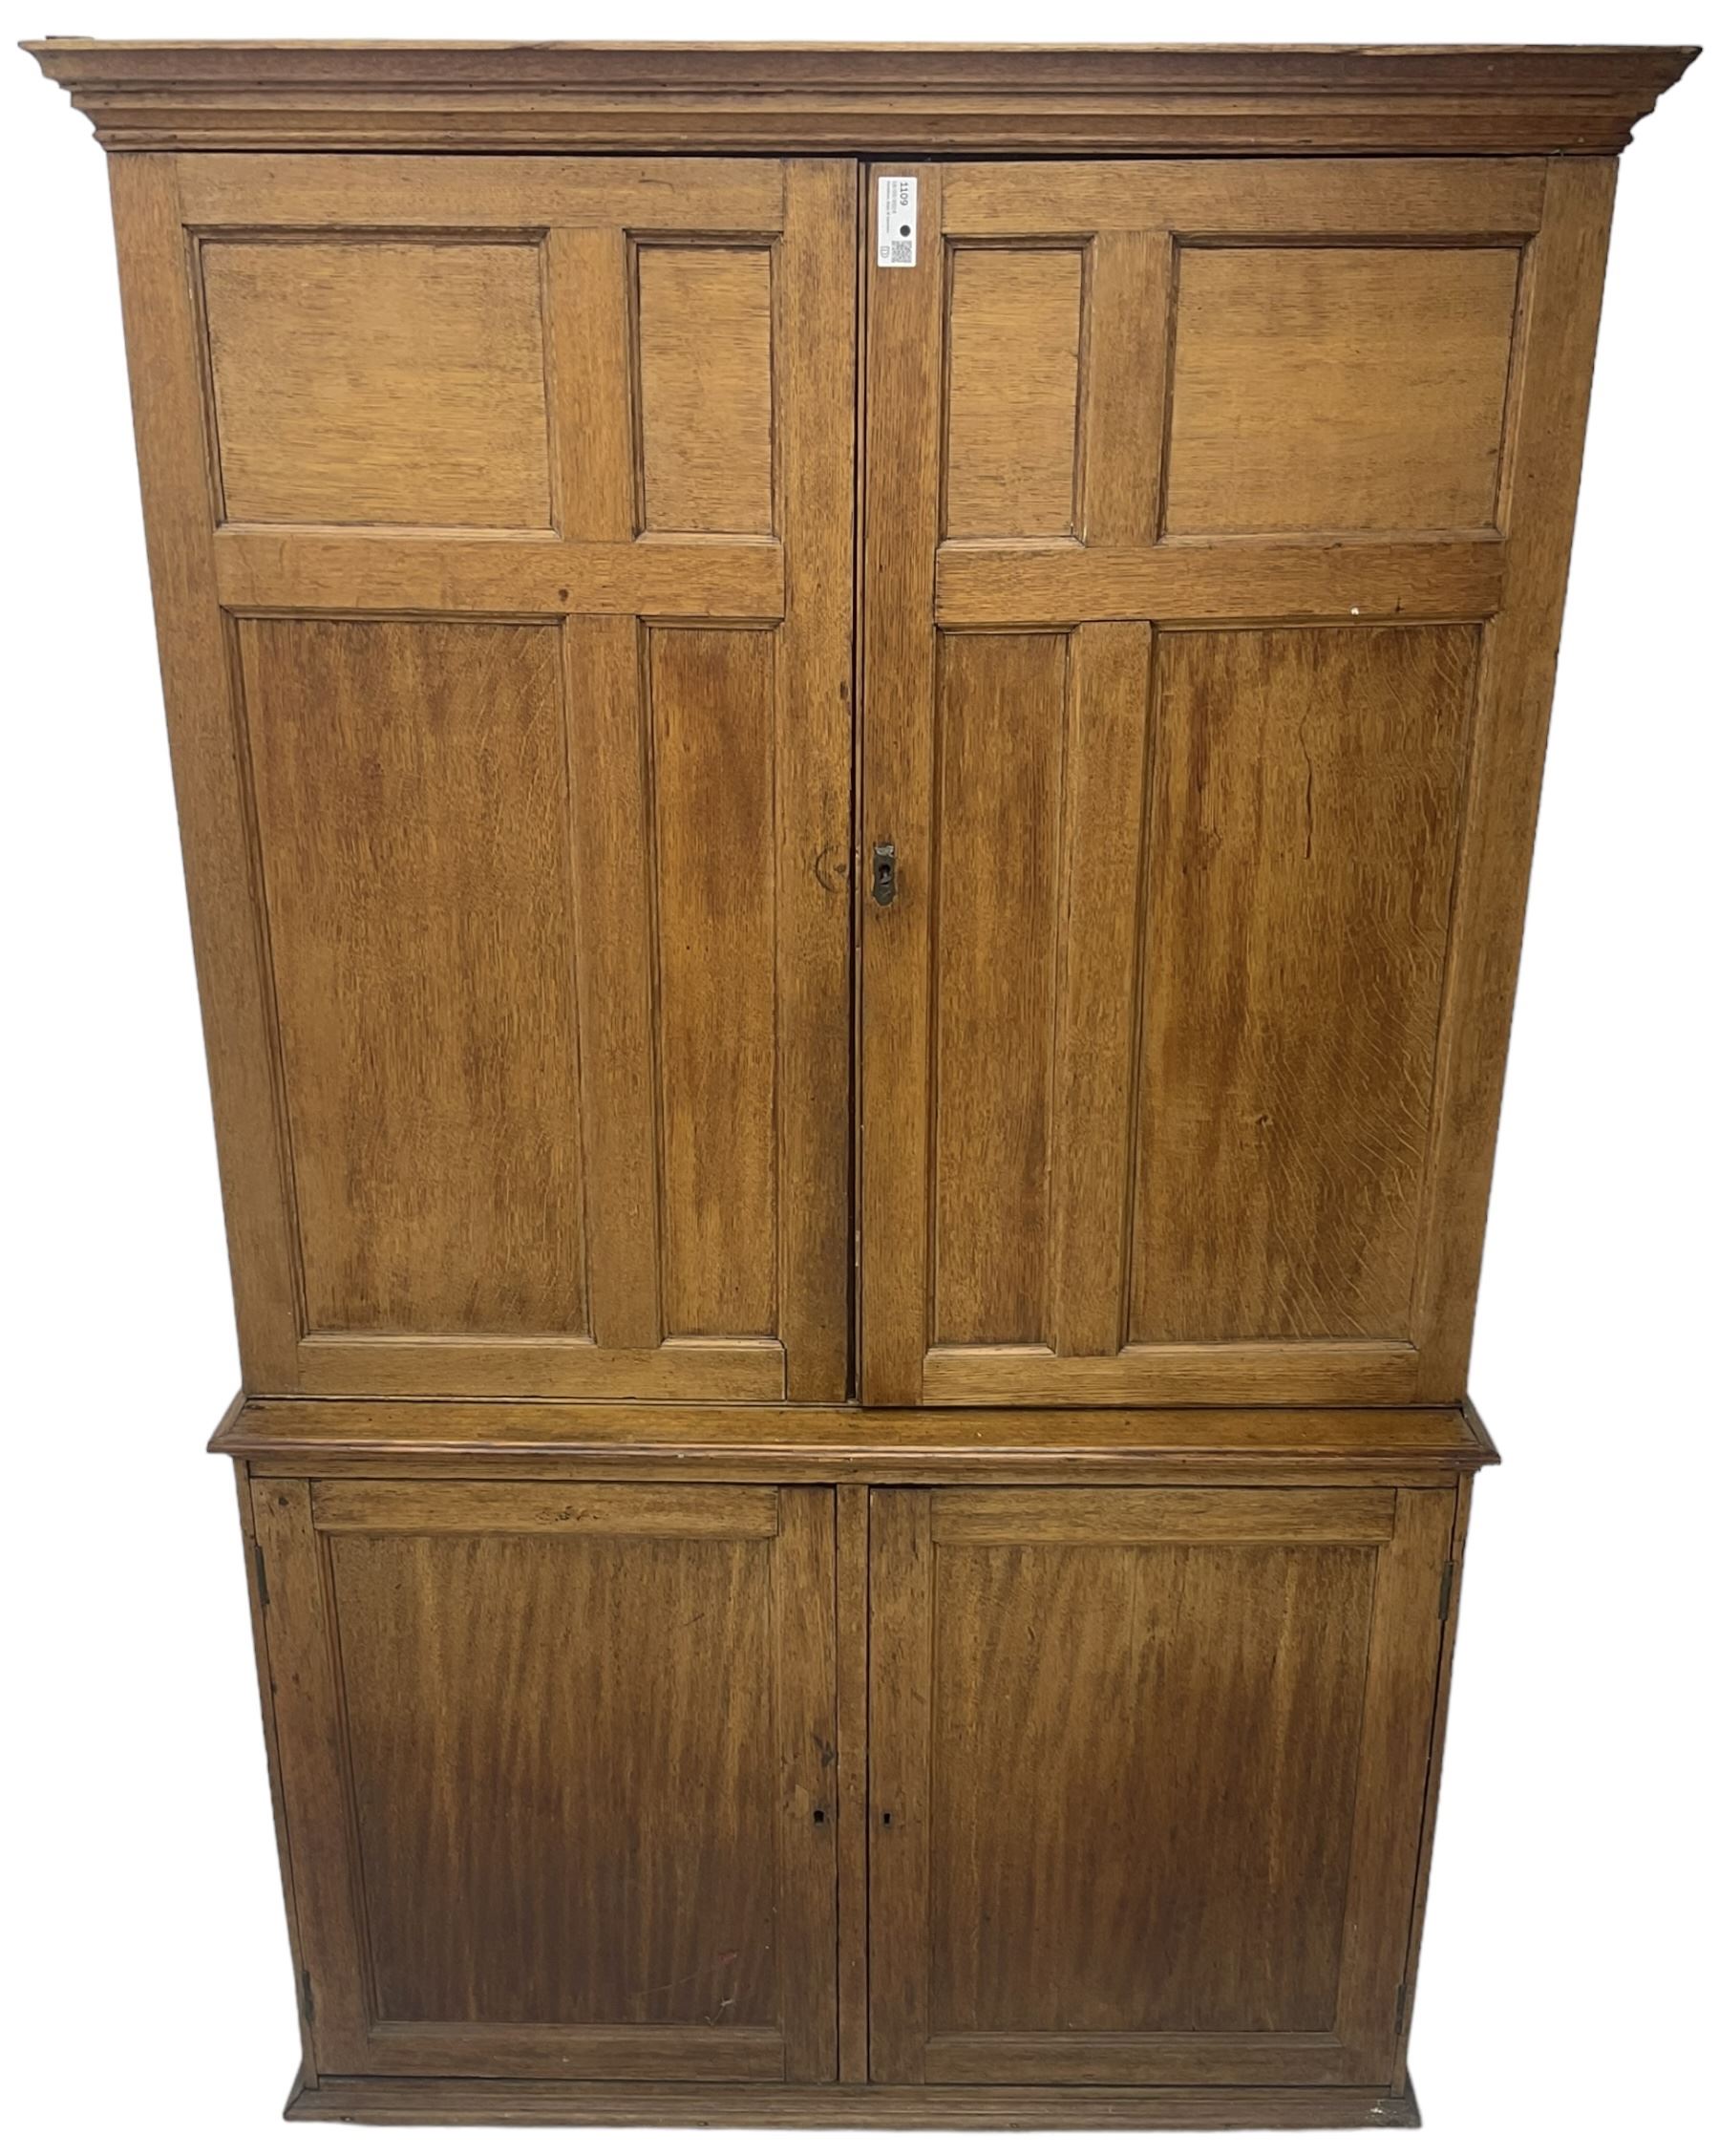 19th century oak house keeper's cupboard - Image 2 of 6